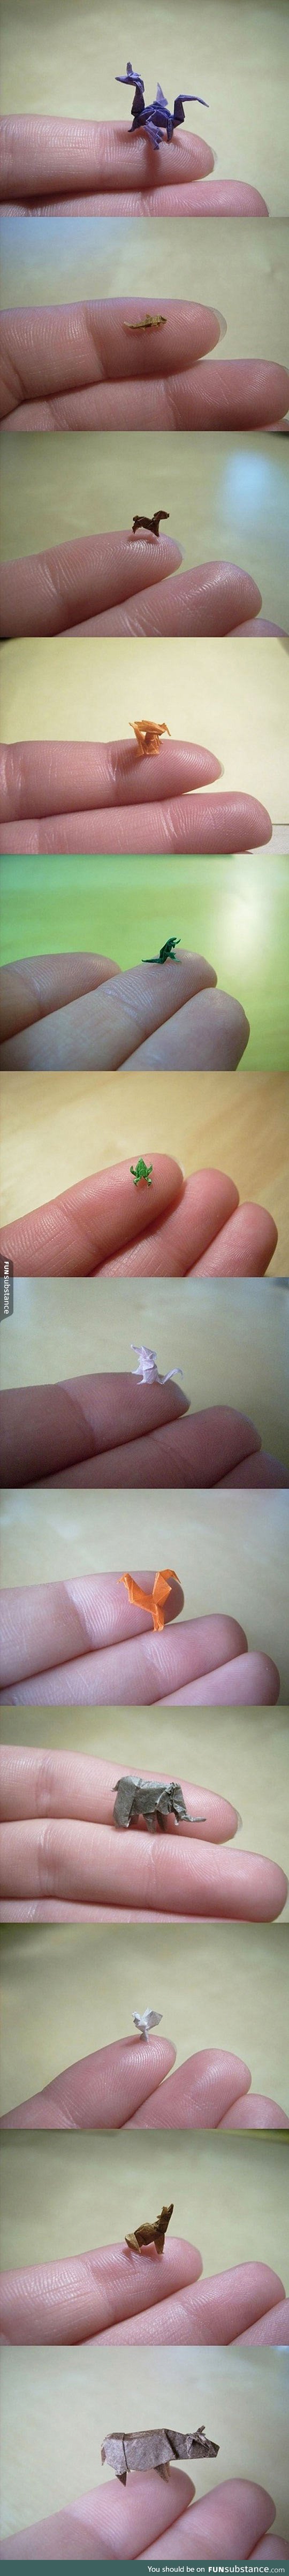 Artists Makes Super Tiny origami